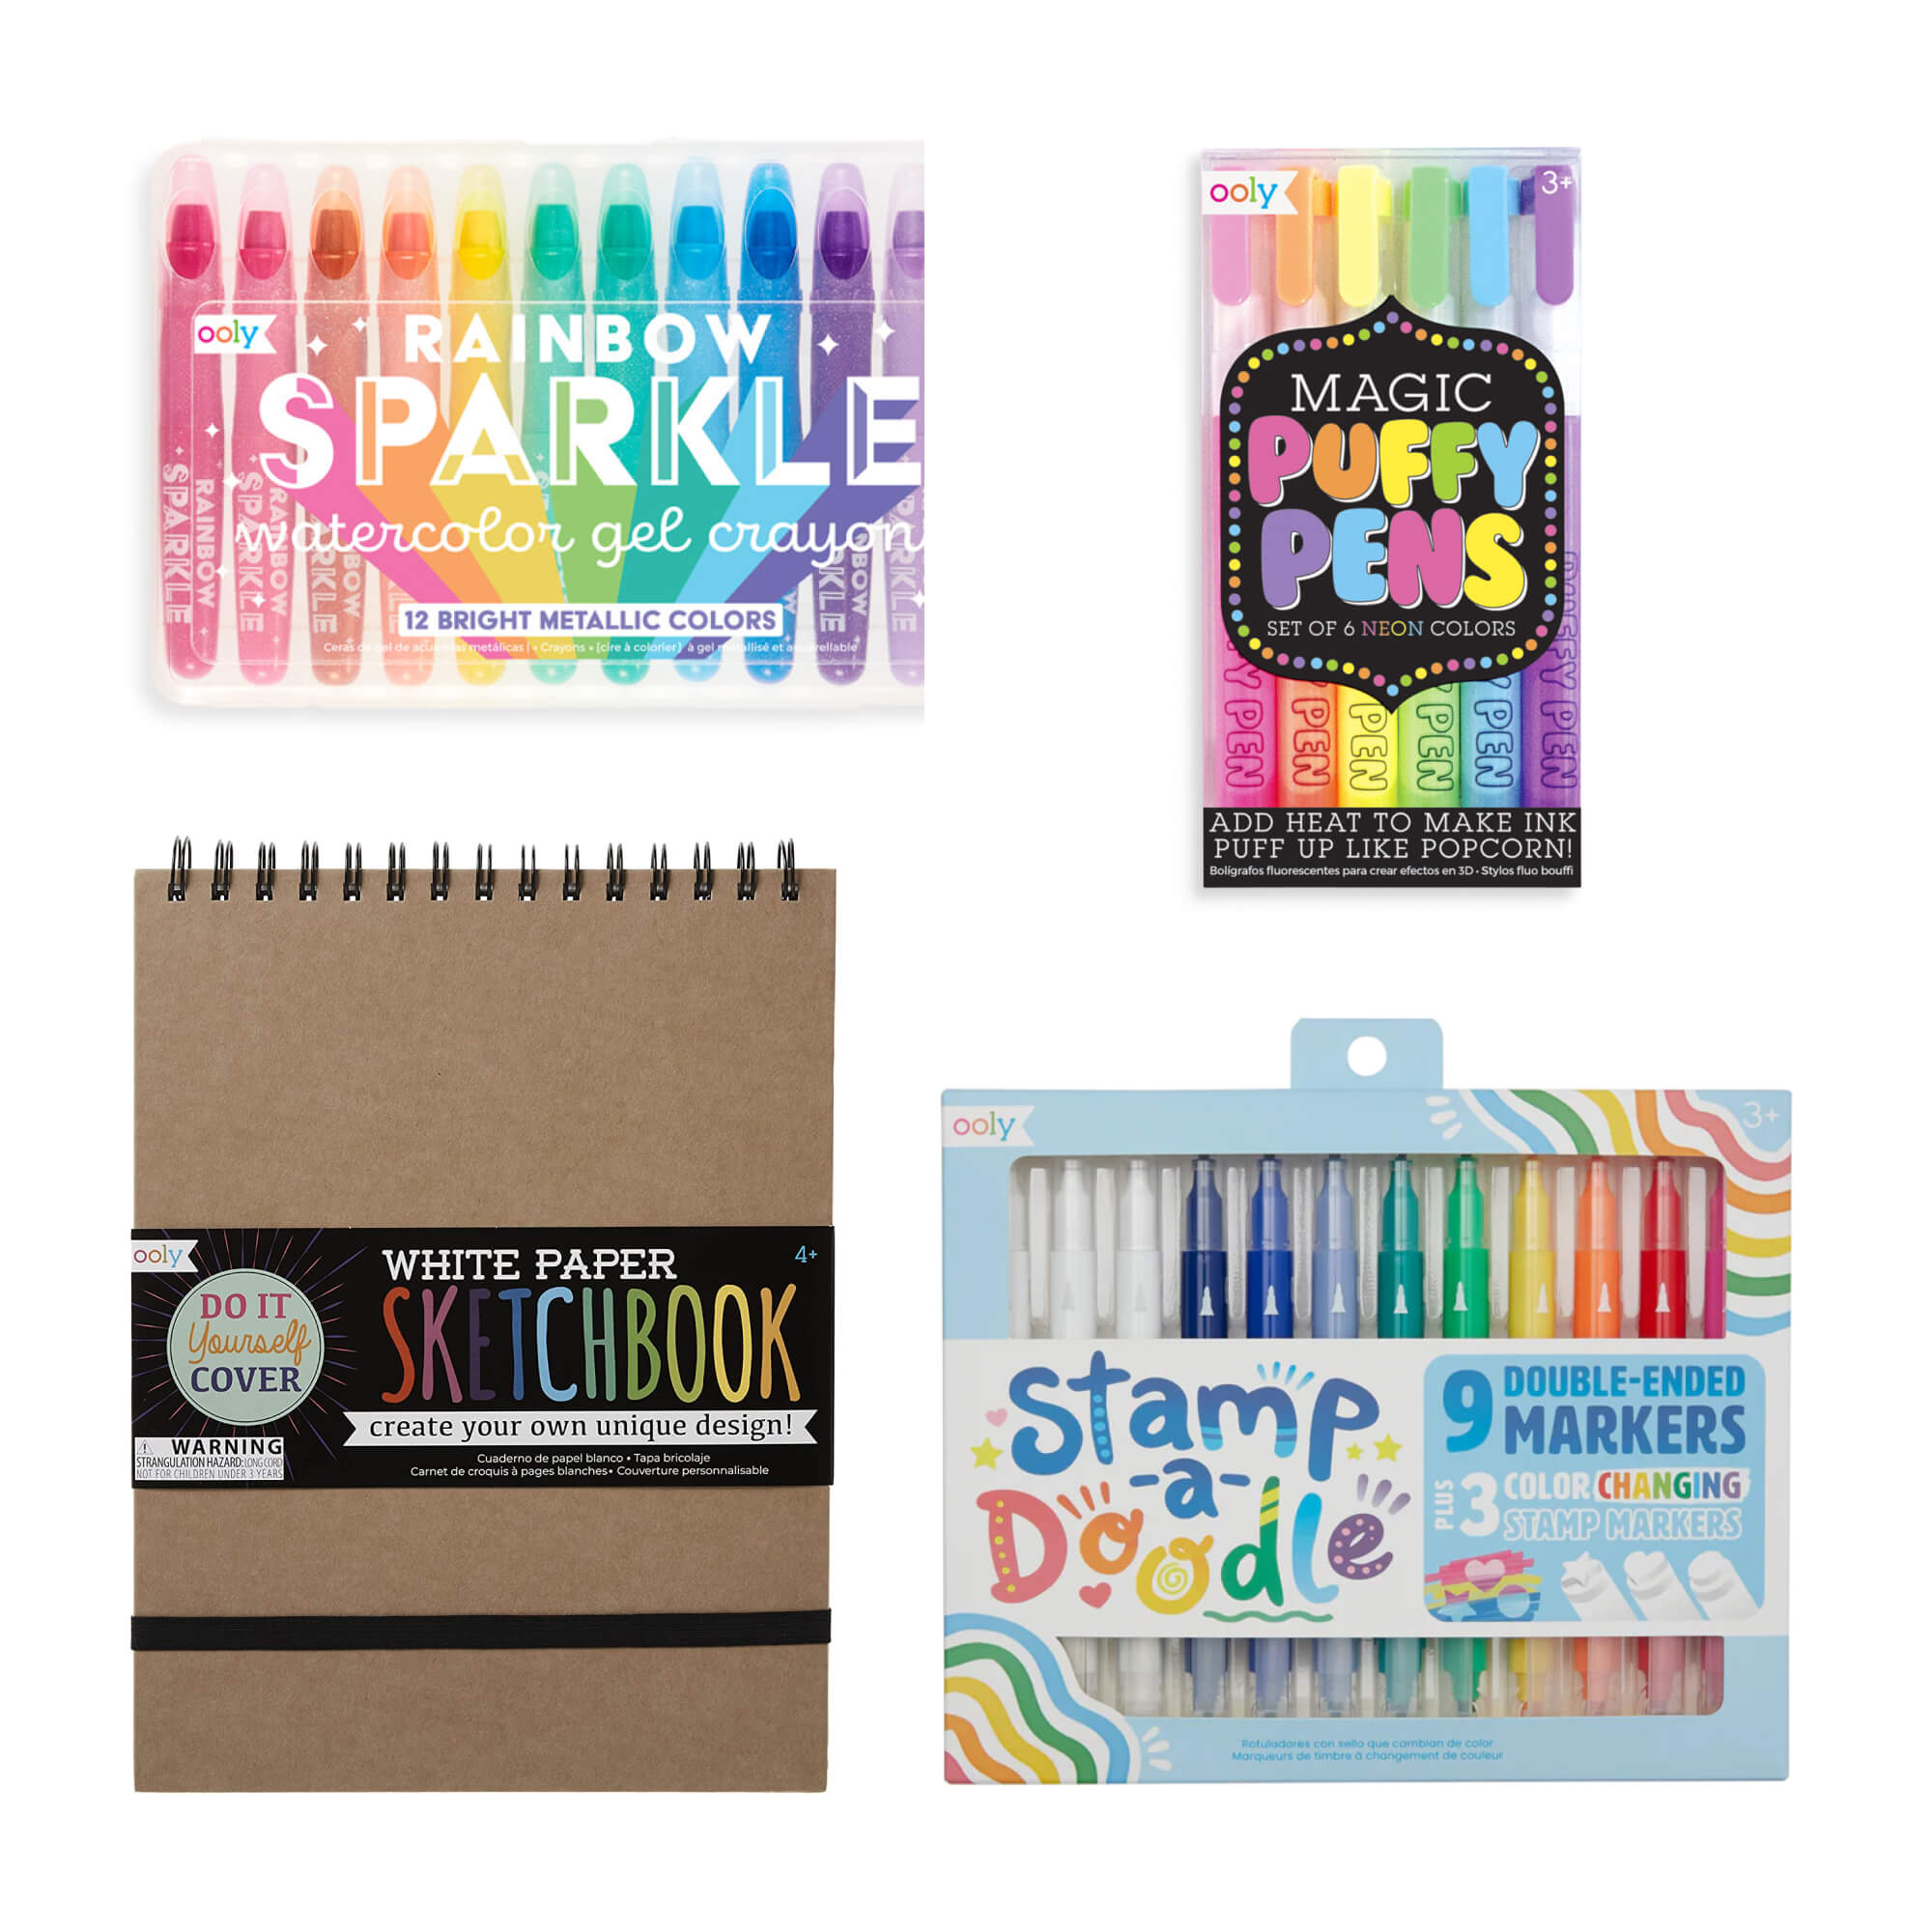 Magic Neon Puffy Pens 6 Pack